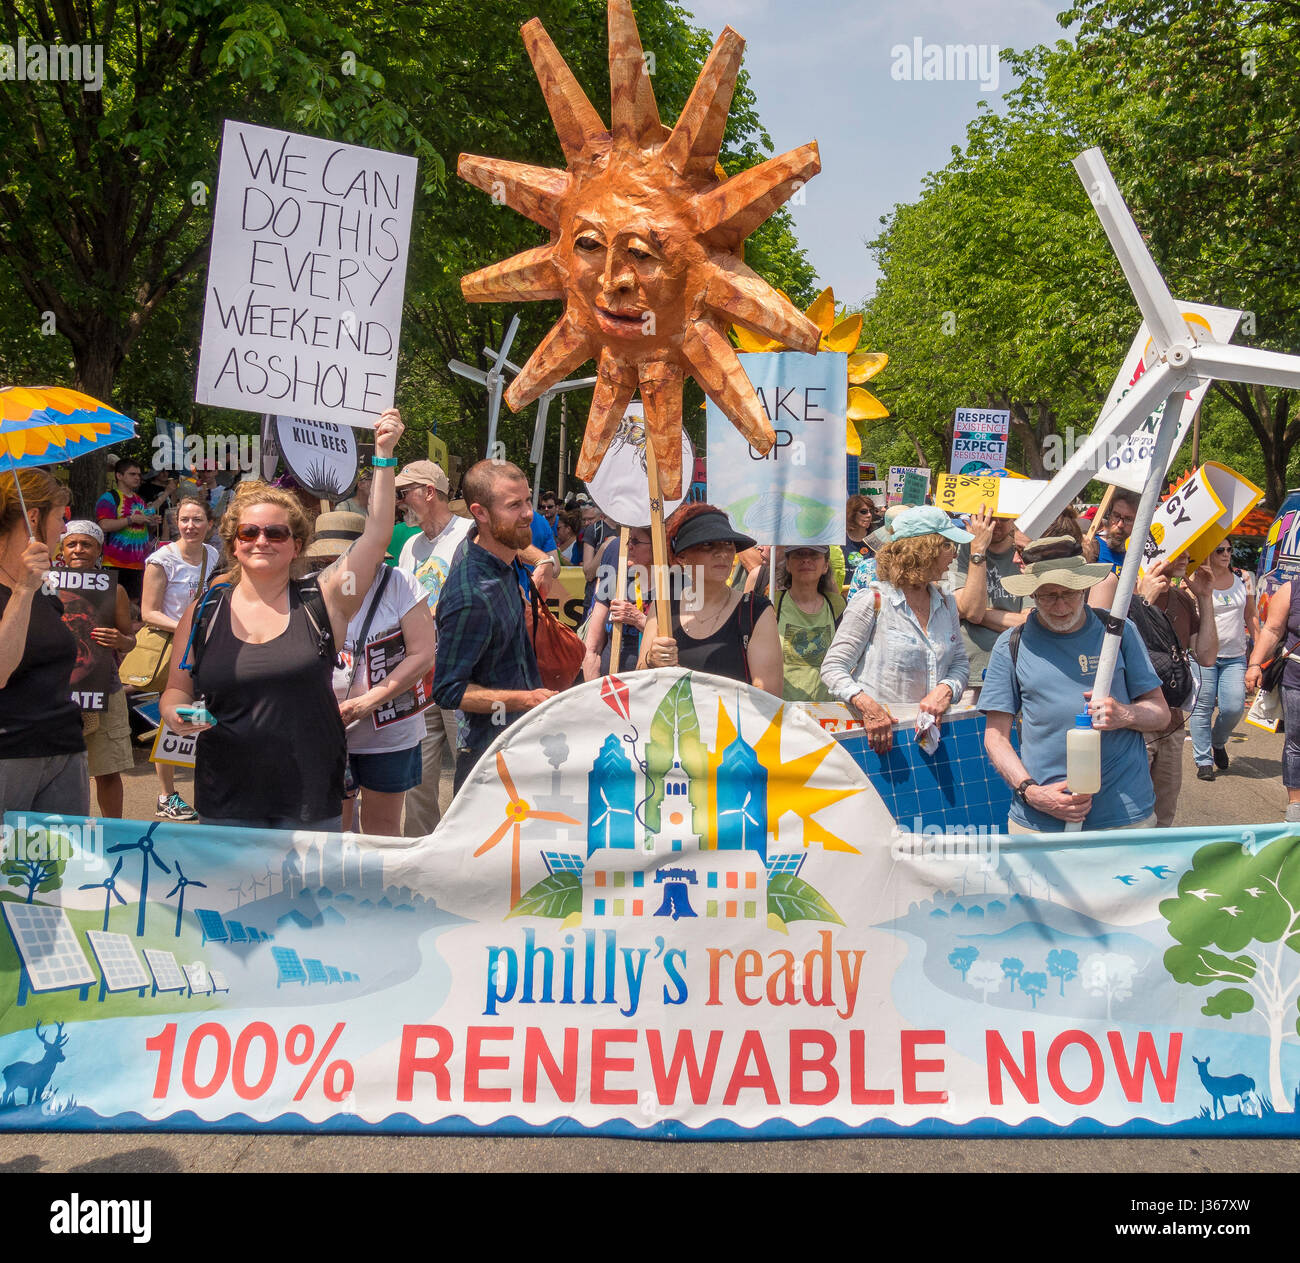 WASHINGTON, DC, USA - Climate March Demonstranten protestieren. Stockfoto